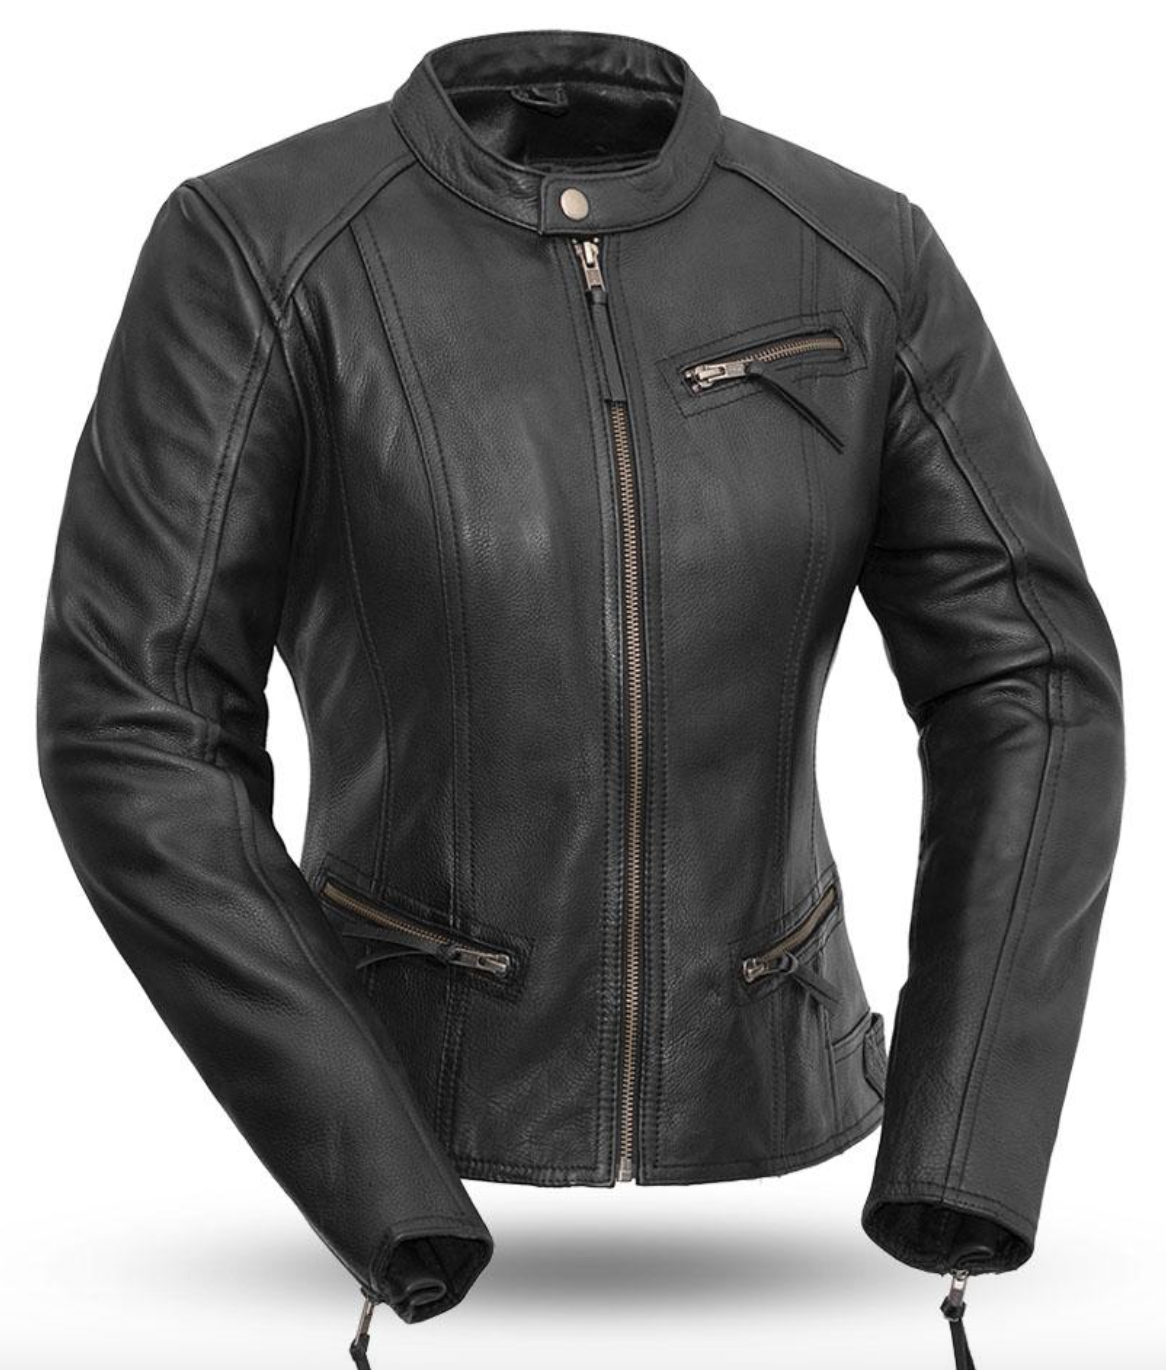 Fashionista - Women's Motorcycle Leather Jacket